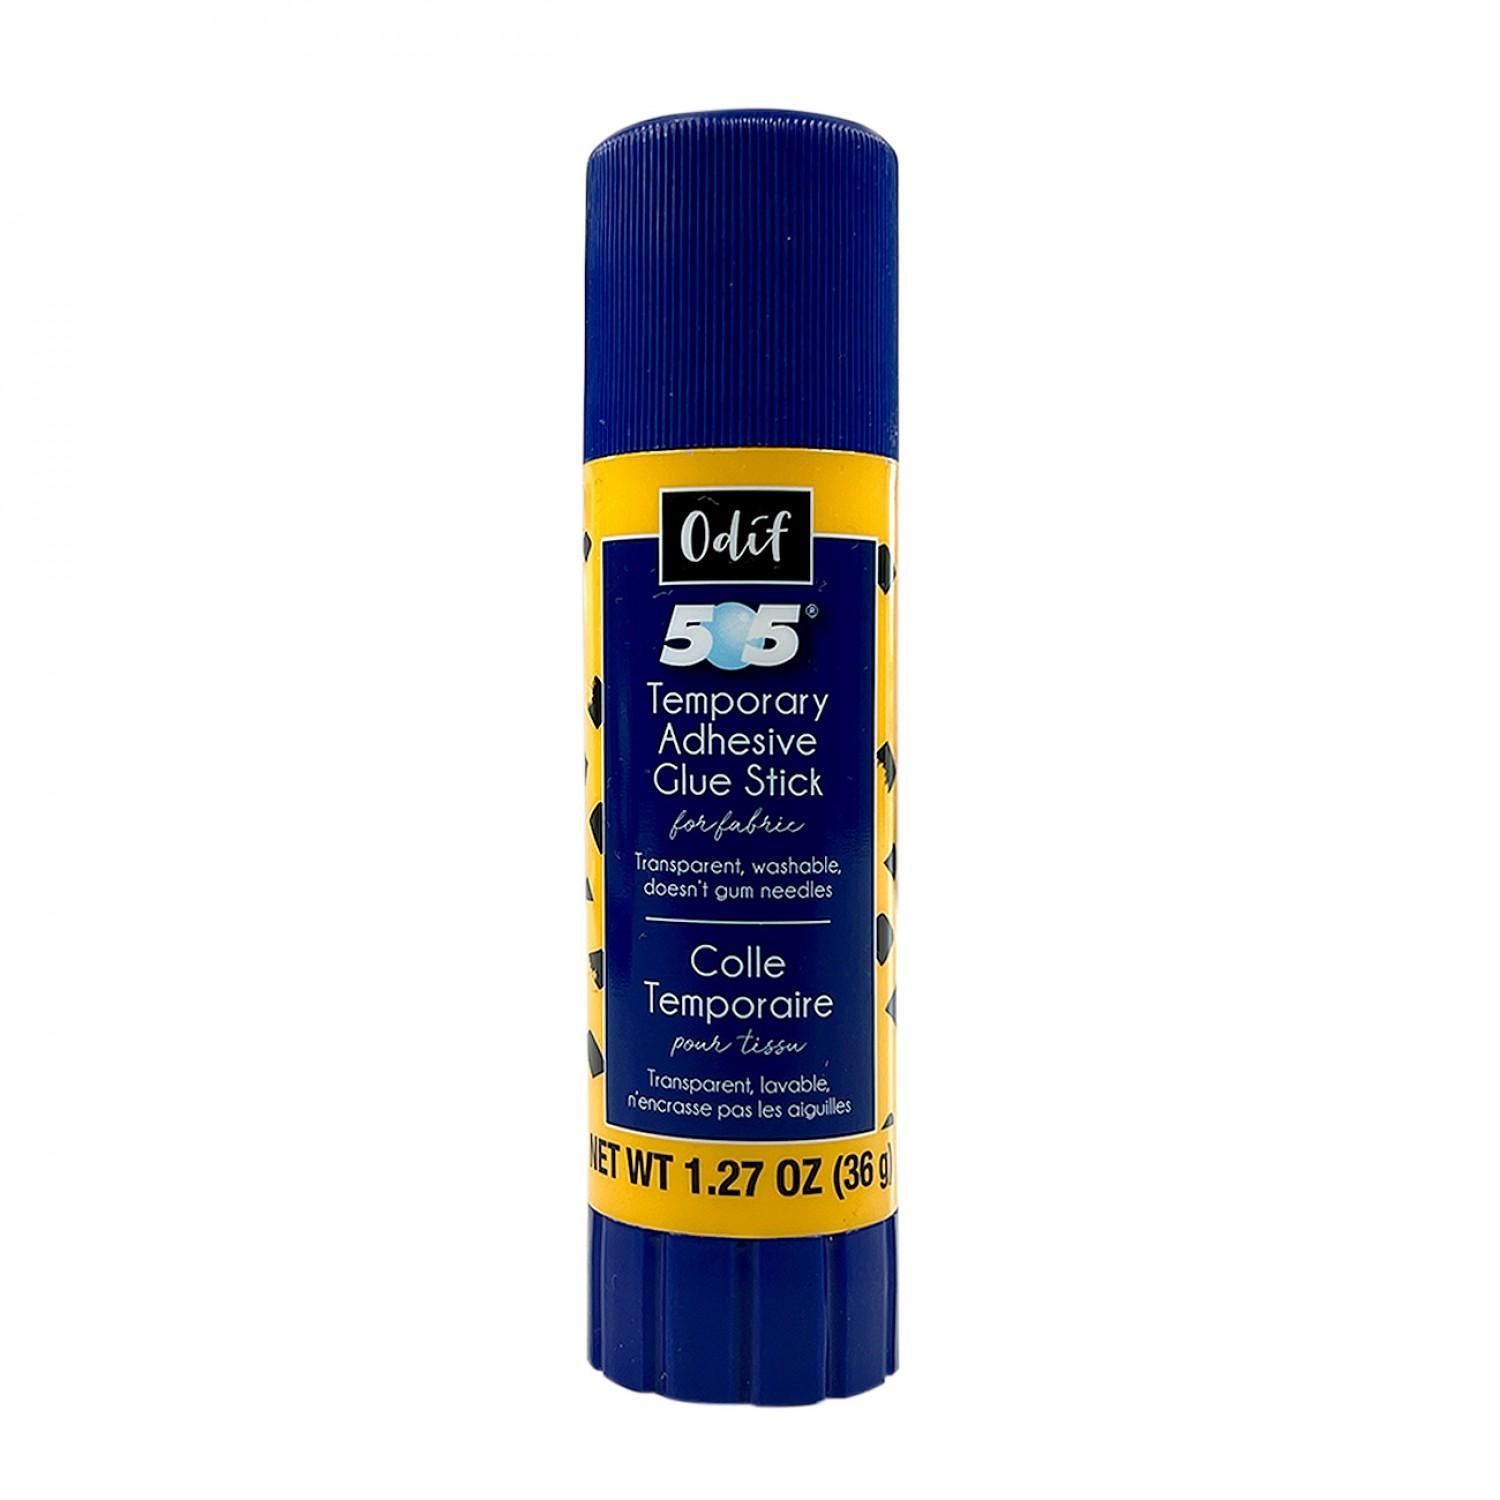 ODIF 505 Temporary Adhesive Glue Stick - 3030621